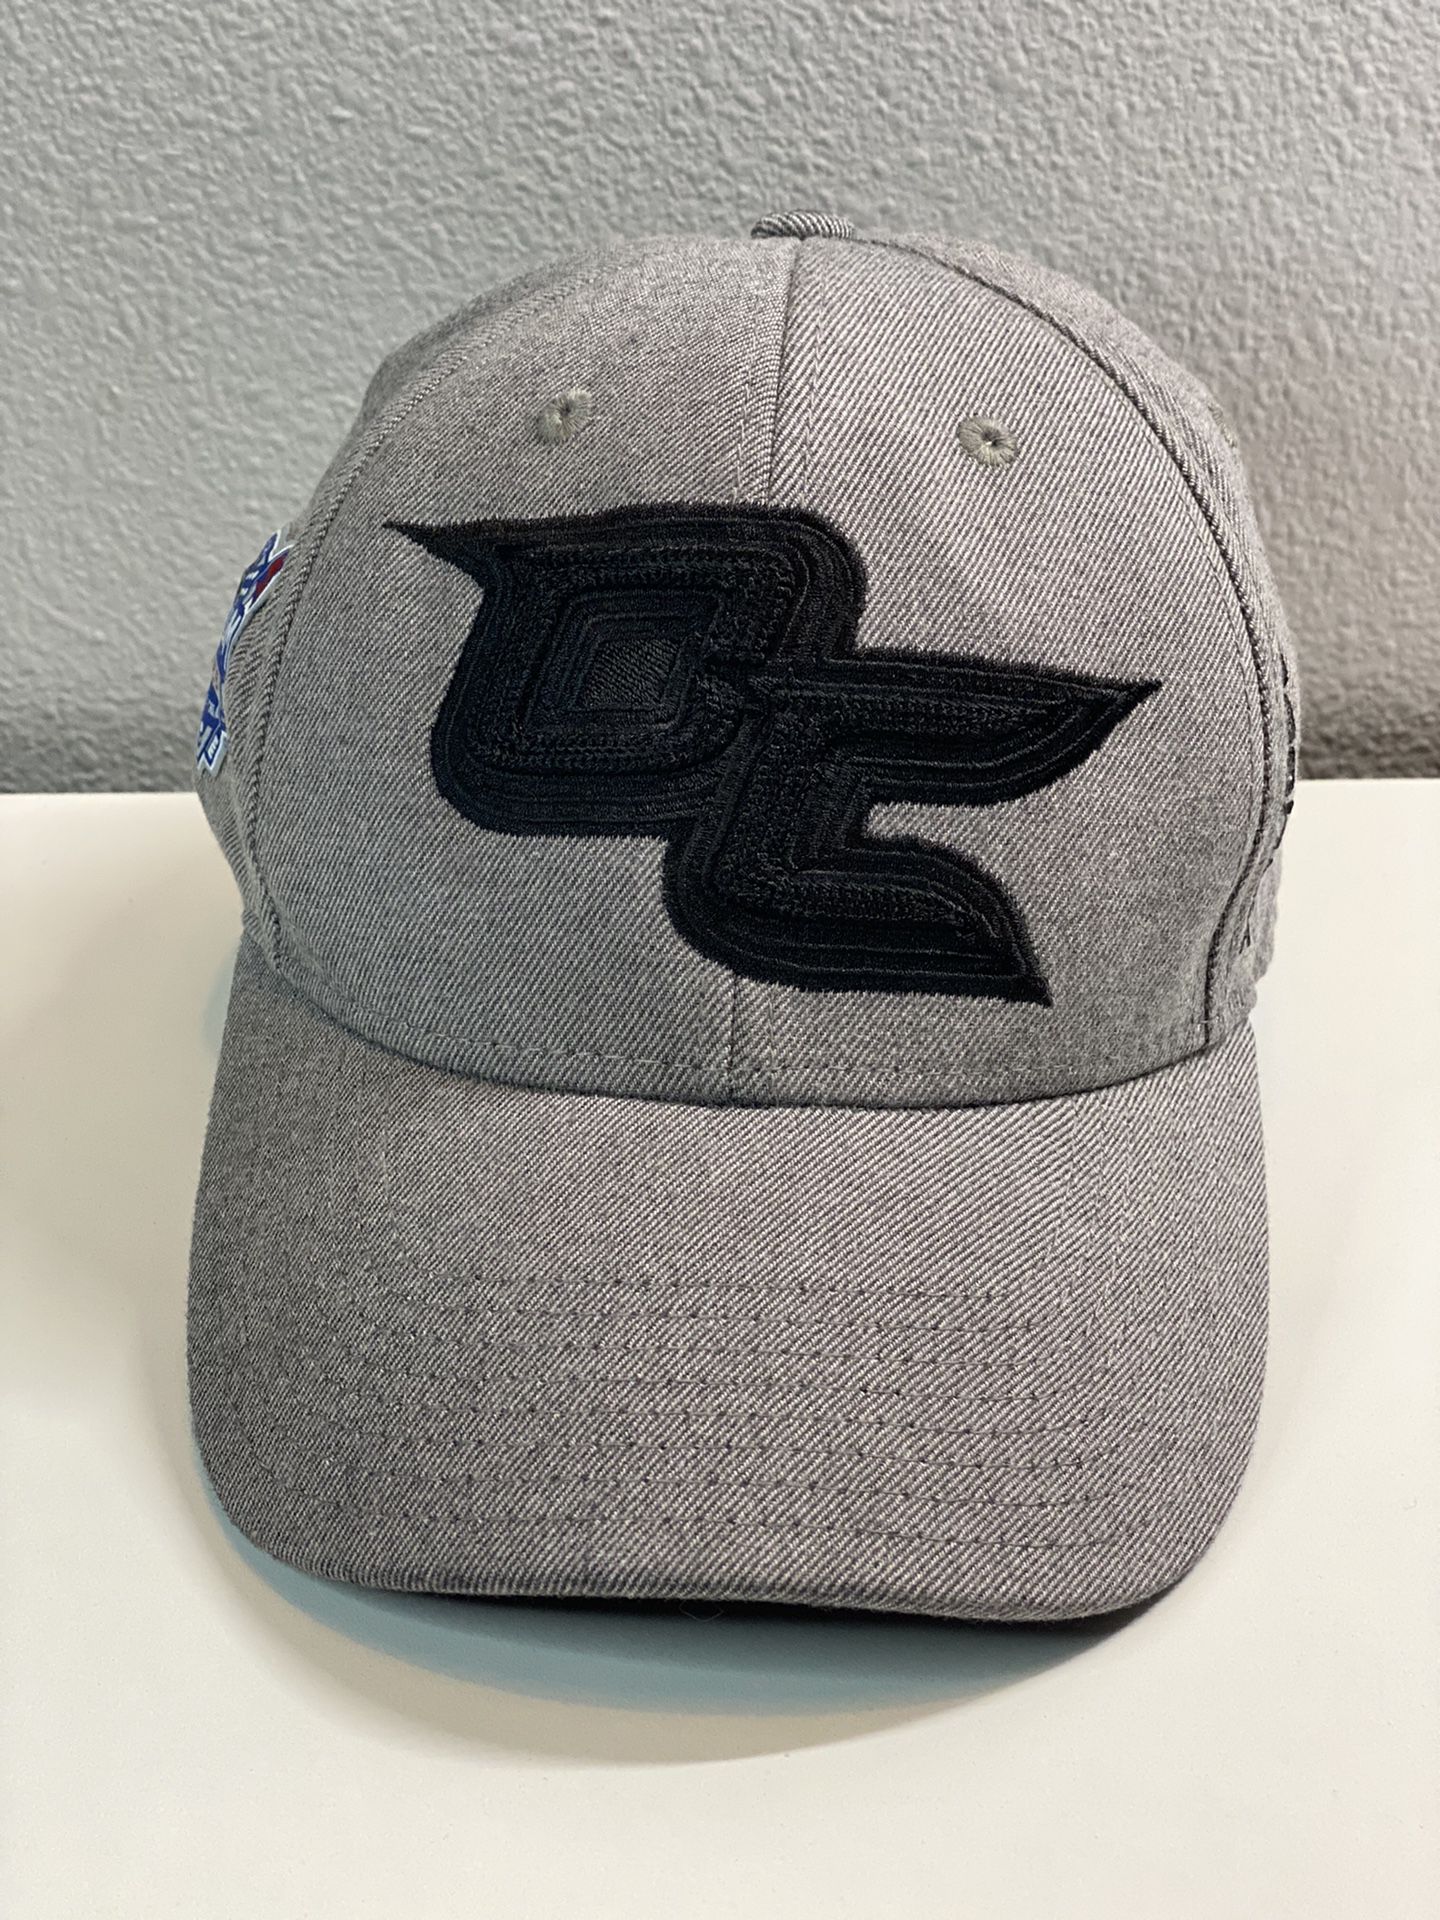 Stadium Series 2014 NHL Reebok S/M Fitted Hat 